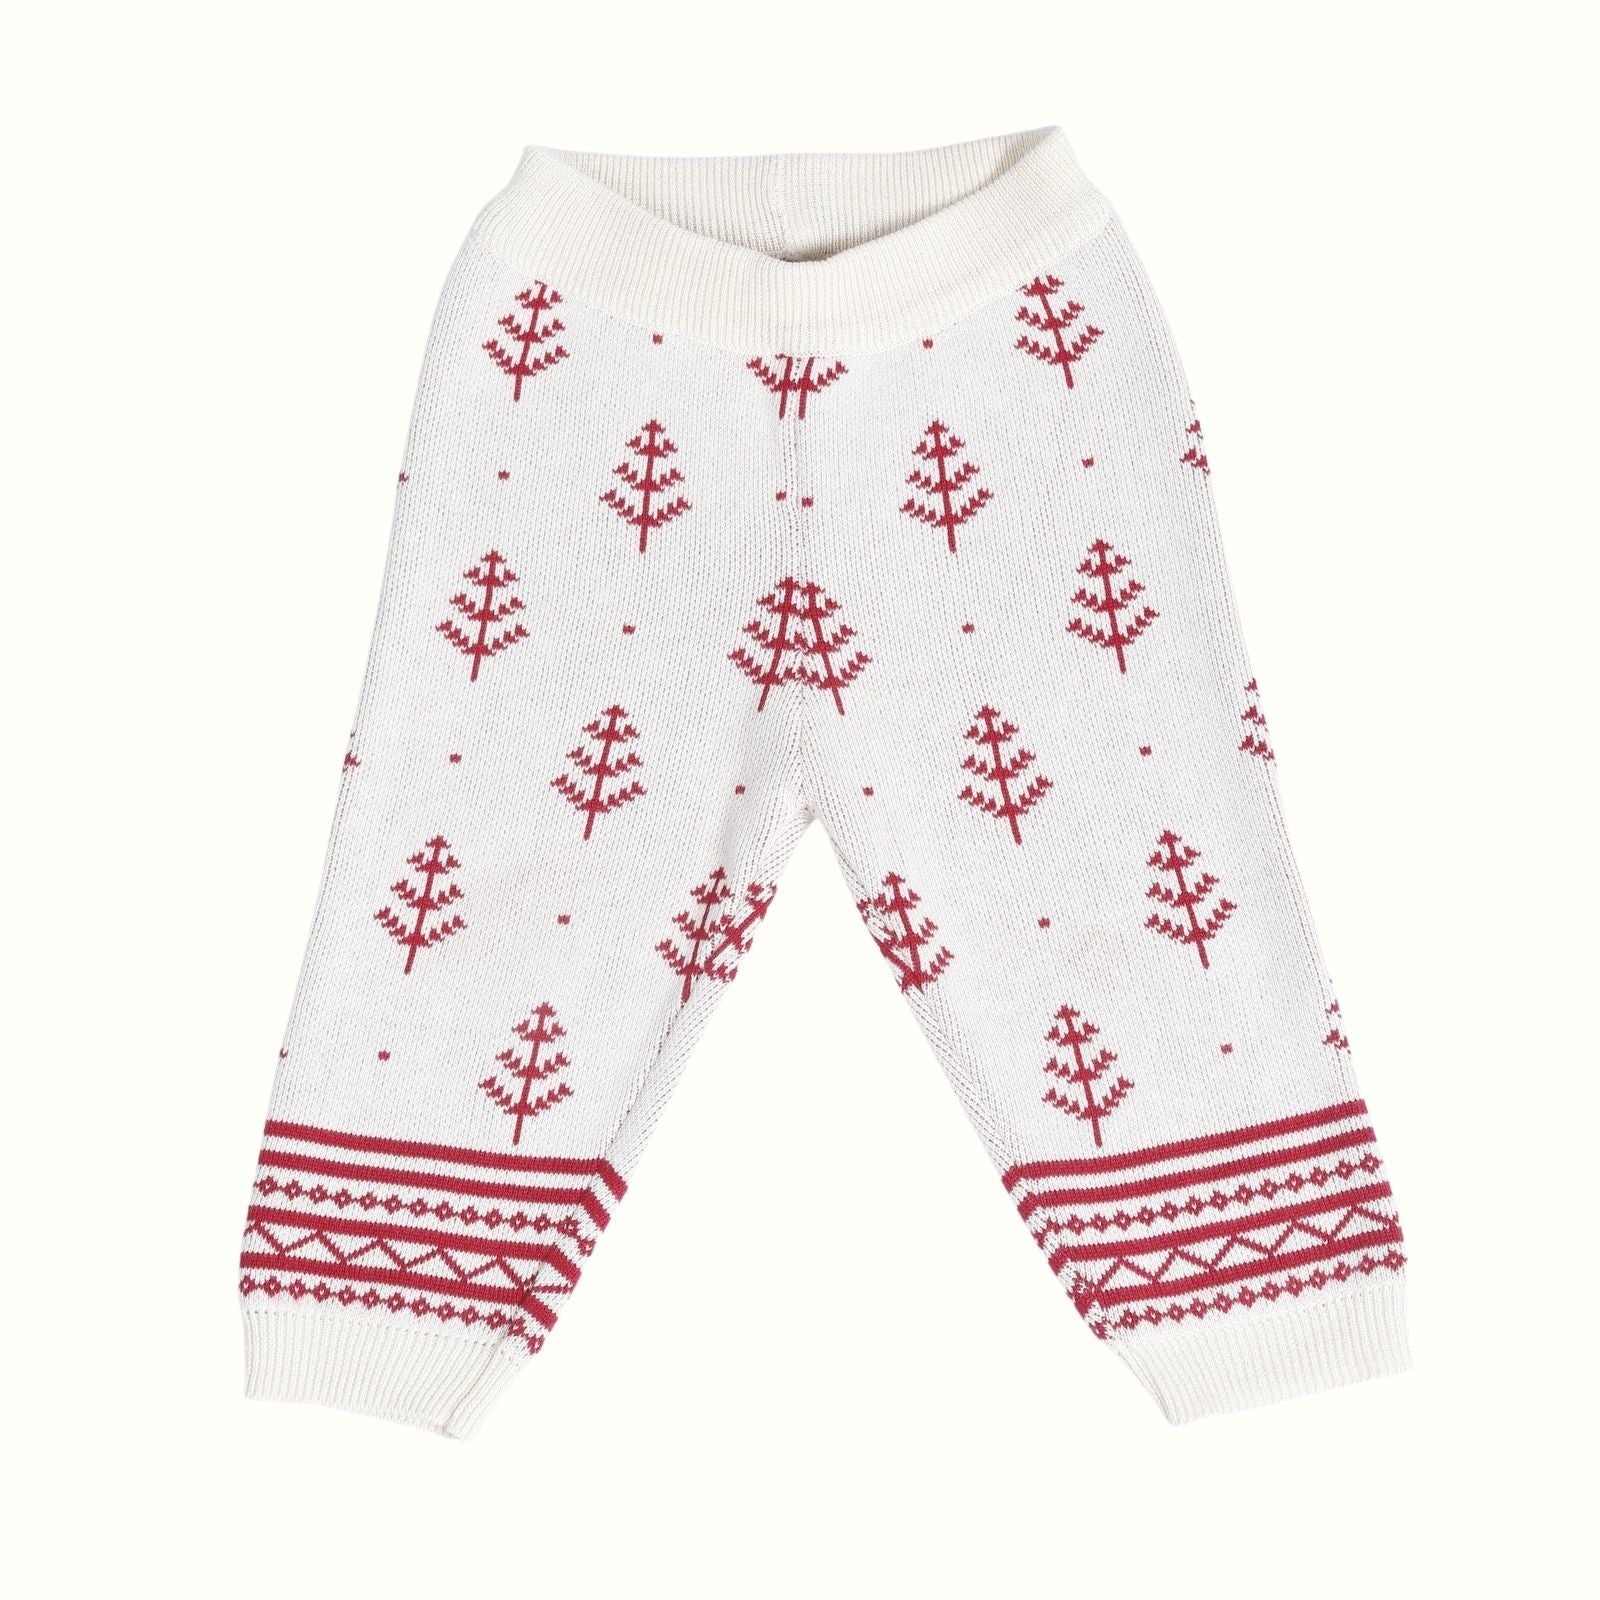 Greendeer Joyful Reindeer Jacquard 100% Cotton Sweater with Lower Set of 4